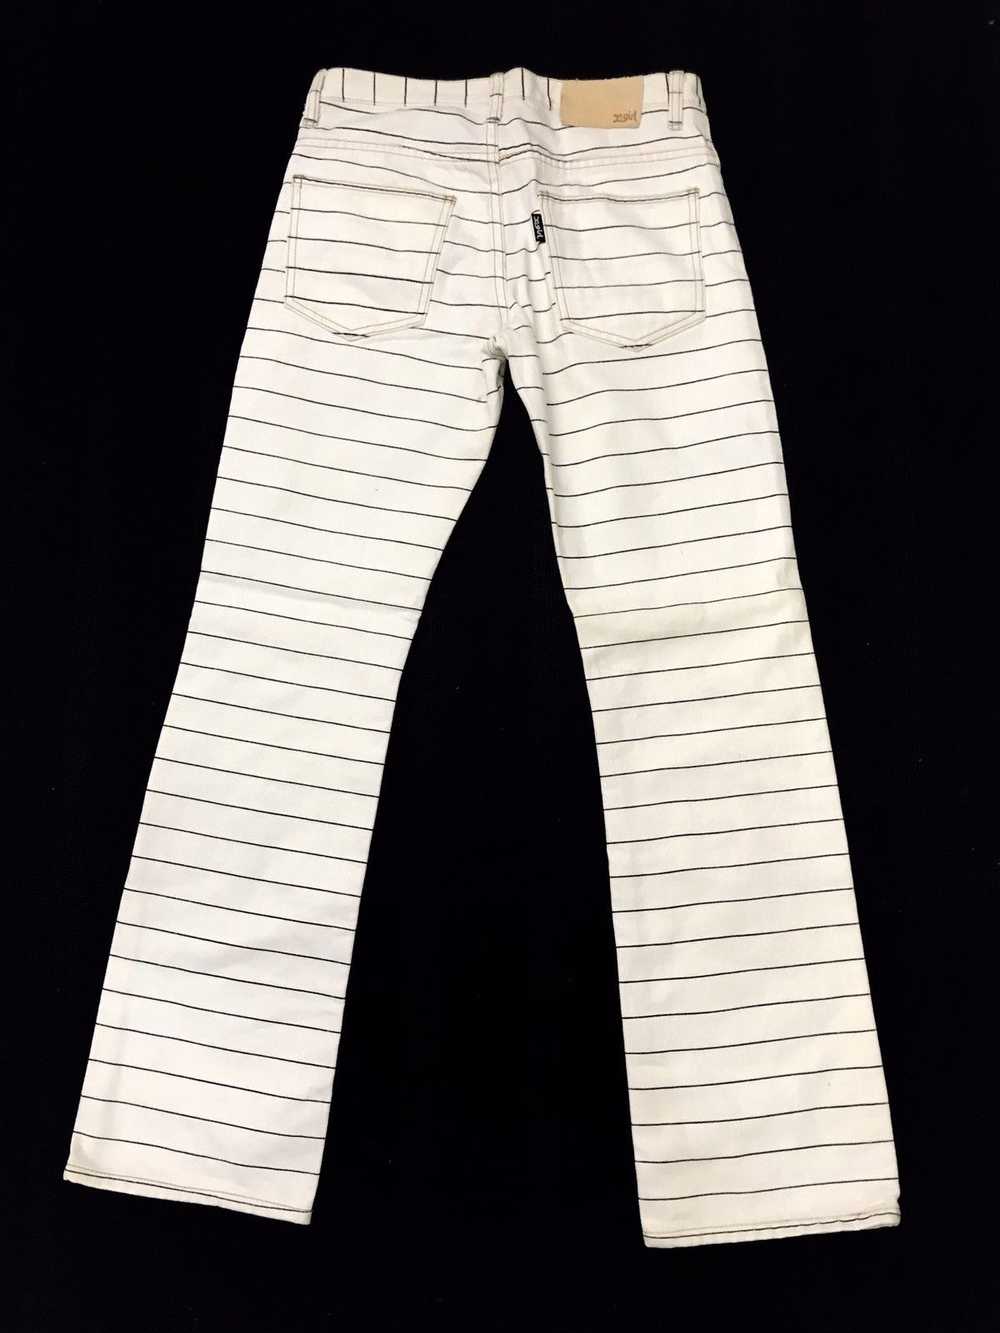 Japanese Brand Japanese Brand X-Girl Striped Jeans - image 4